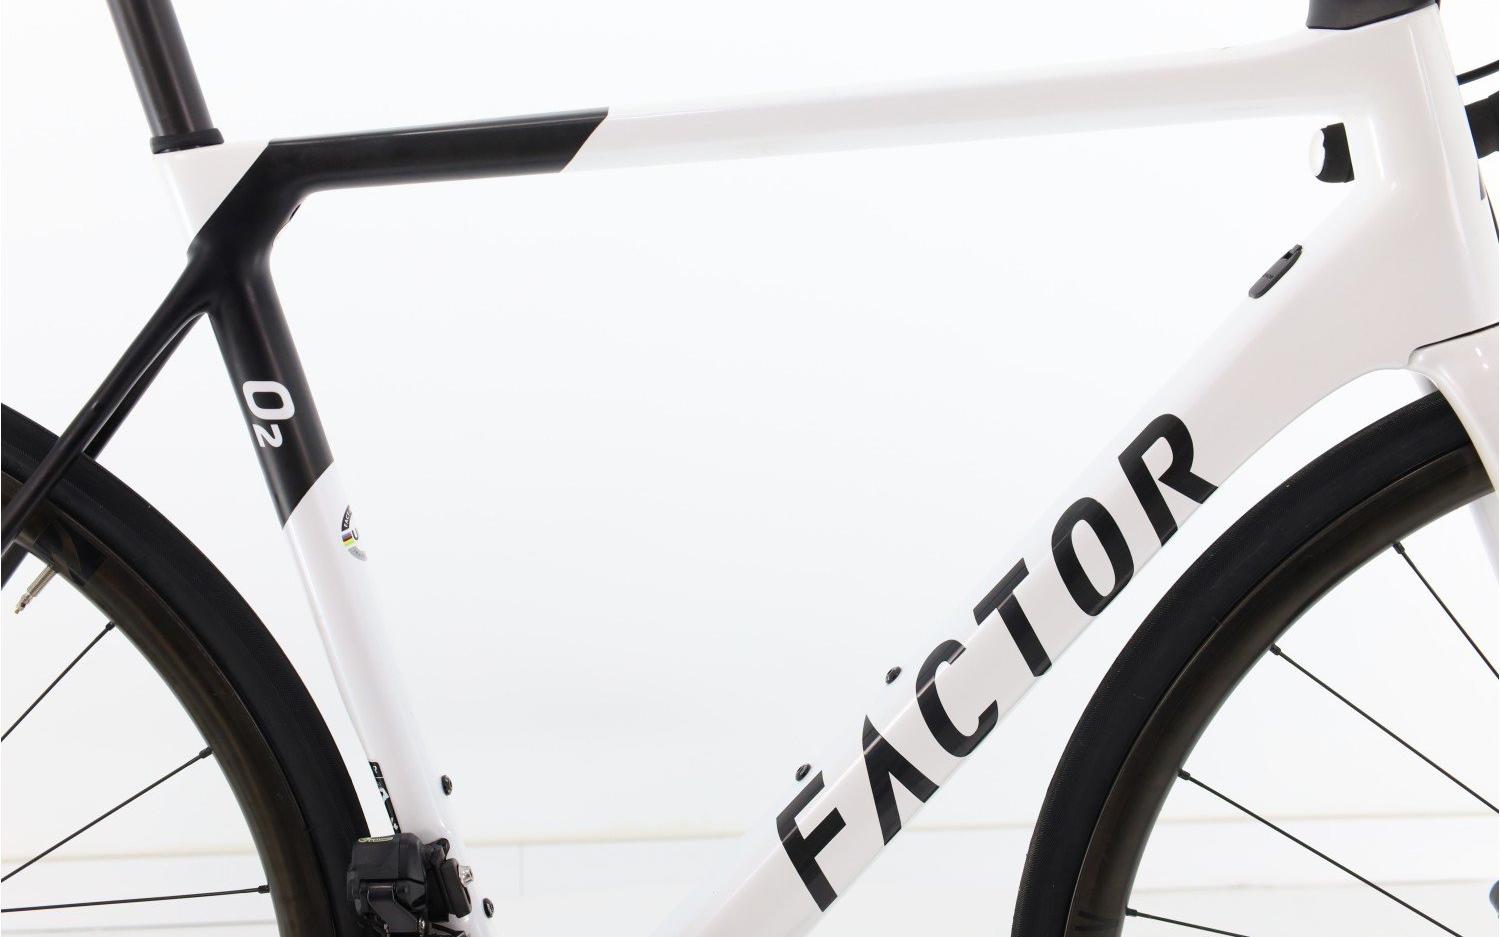 Bici da corsa Factor Zyclora ·  O2 carbonio Di2 12V, Usata, 2022, Barcelona